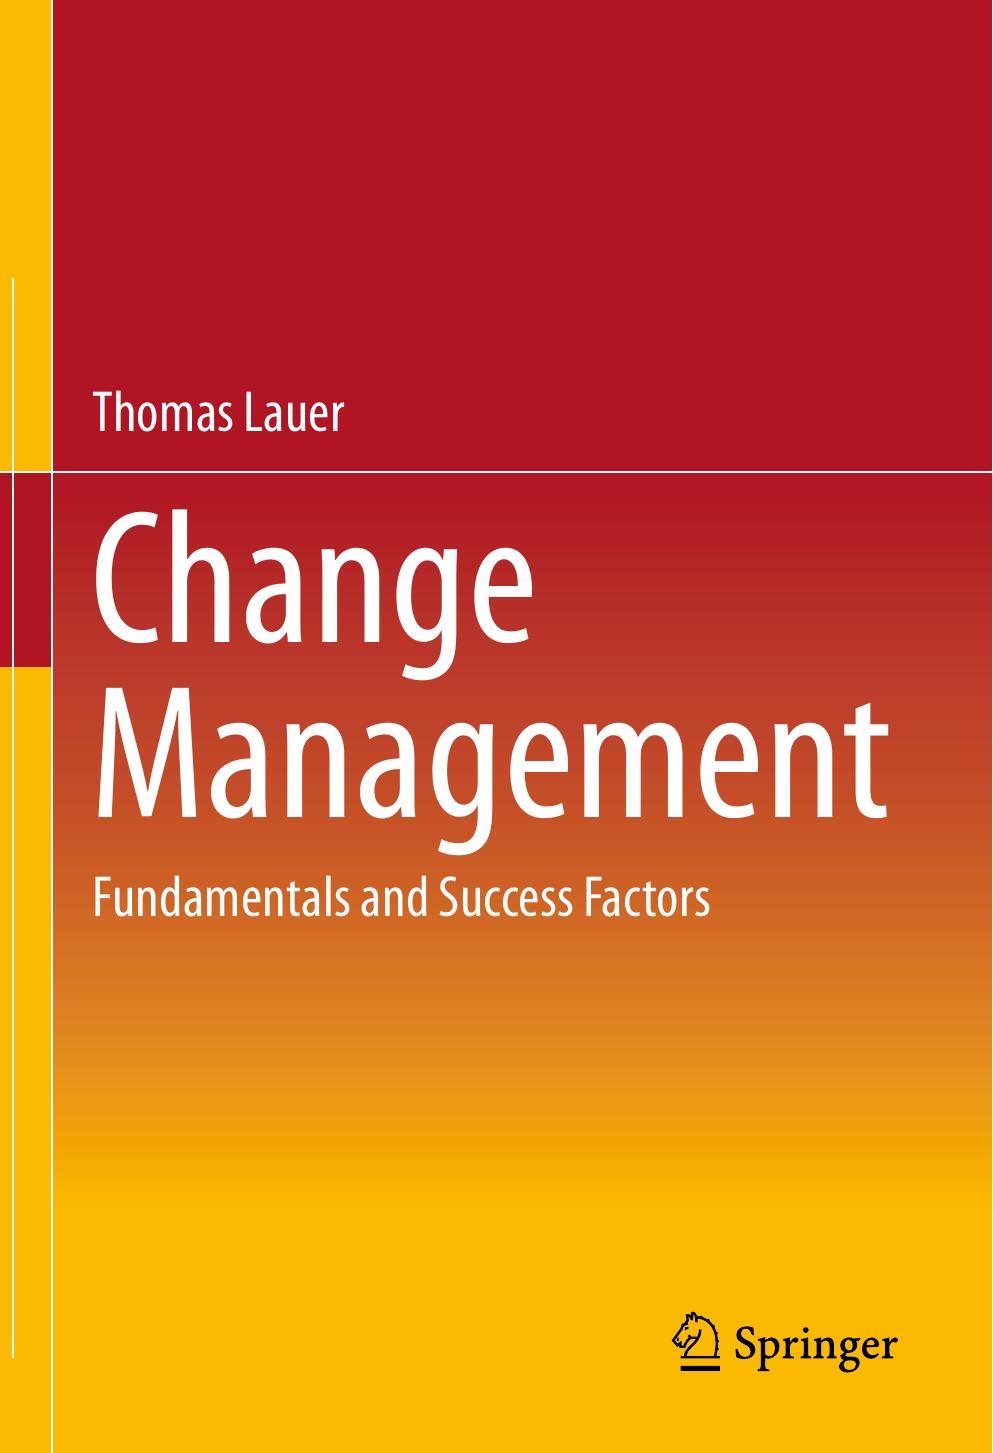 Change Management: Fundamentals and Success Factors